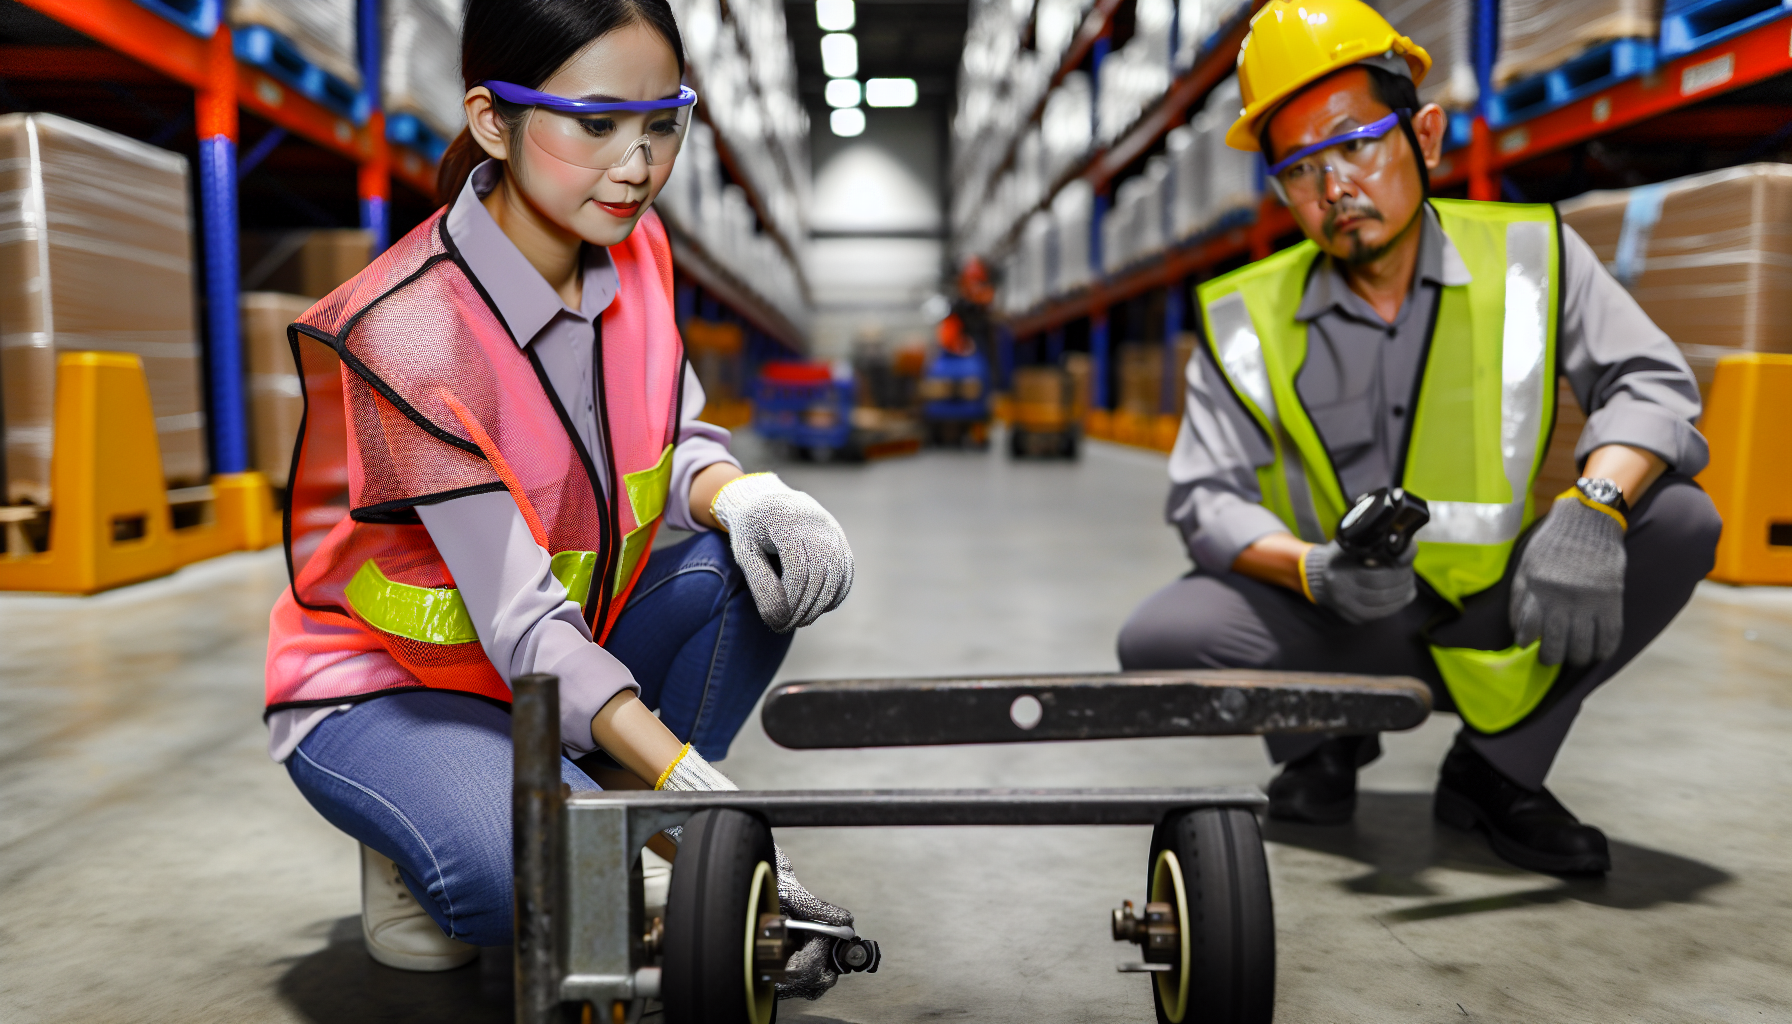 Proper maintenance of flat carts in a warehouse setting